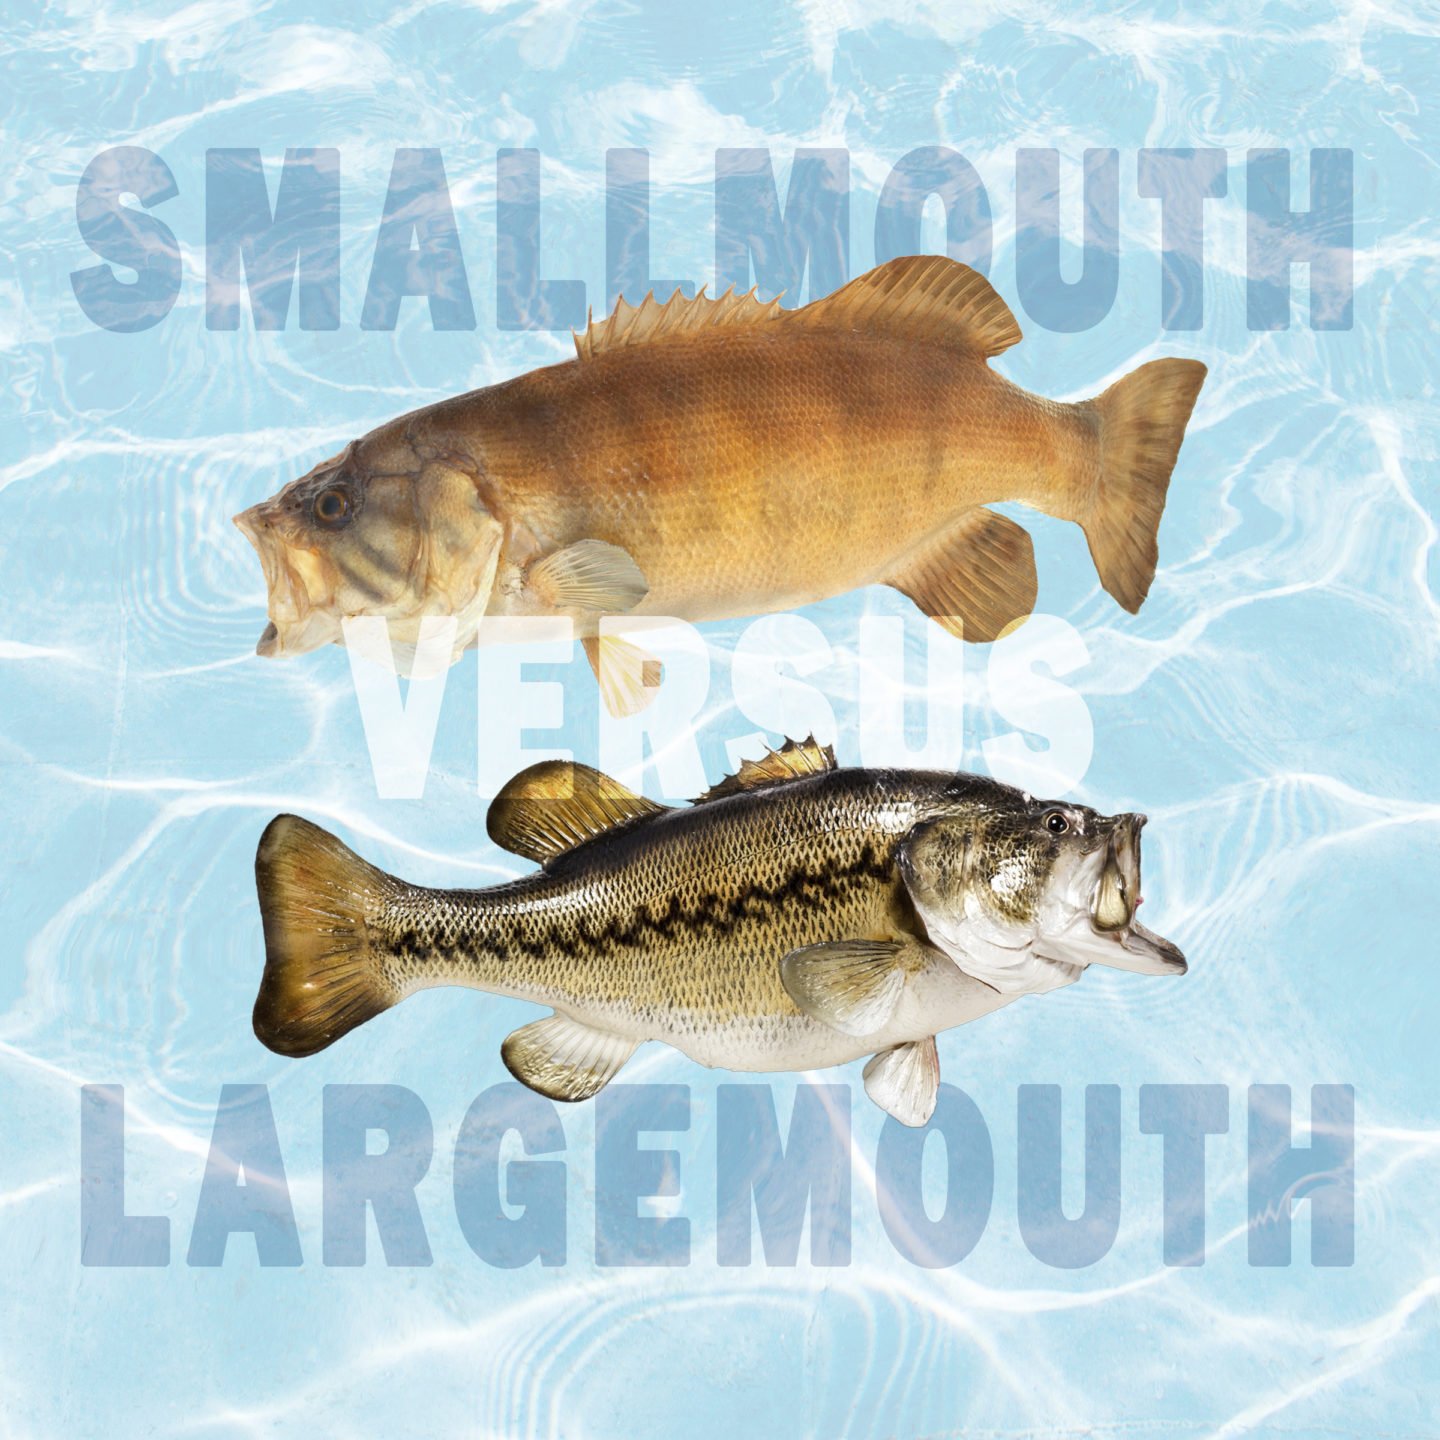 smallmouth vs largemouth bass